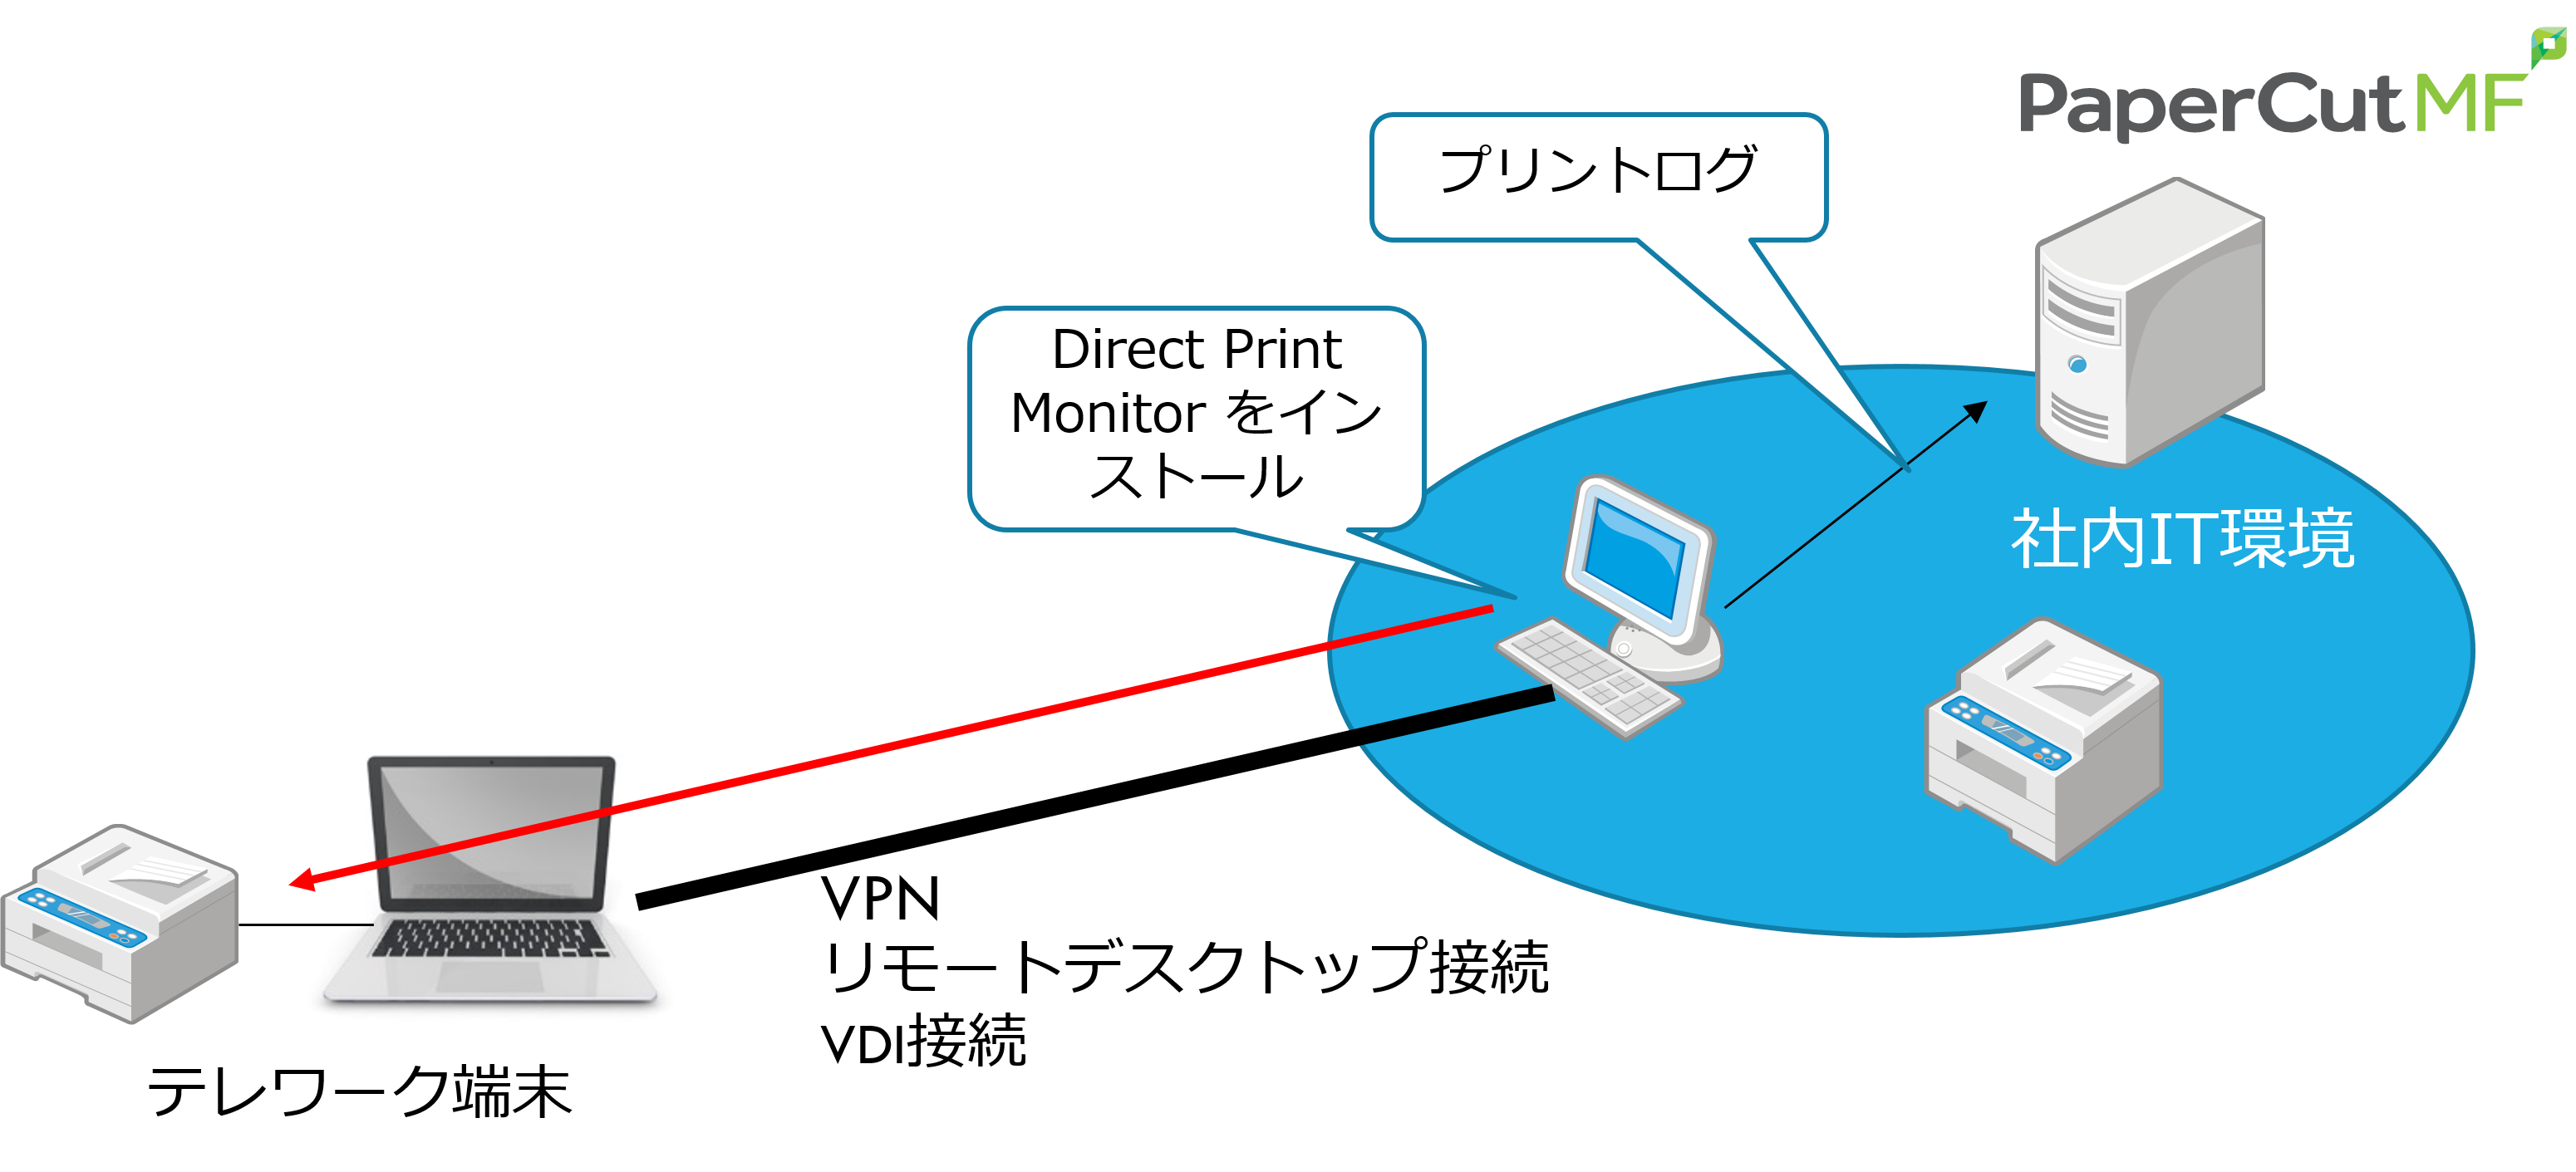 Remote desktop connection